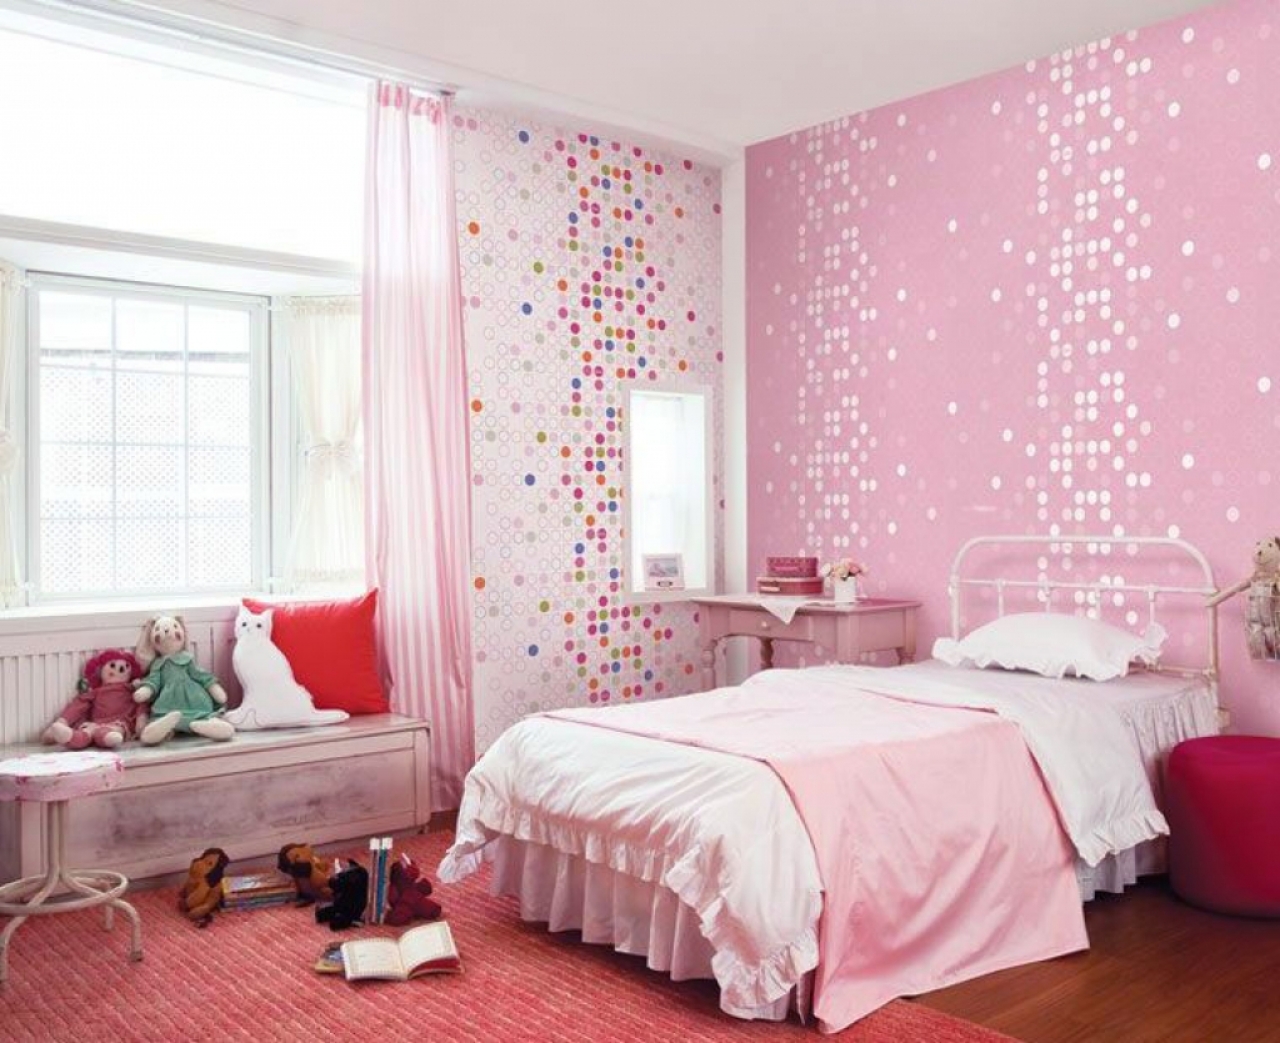 48 Kids Wallpapers For Bedroom On Wallpapersafari